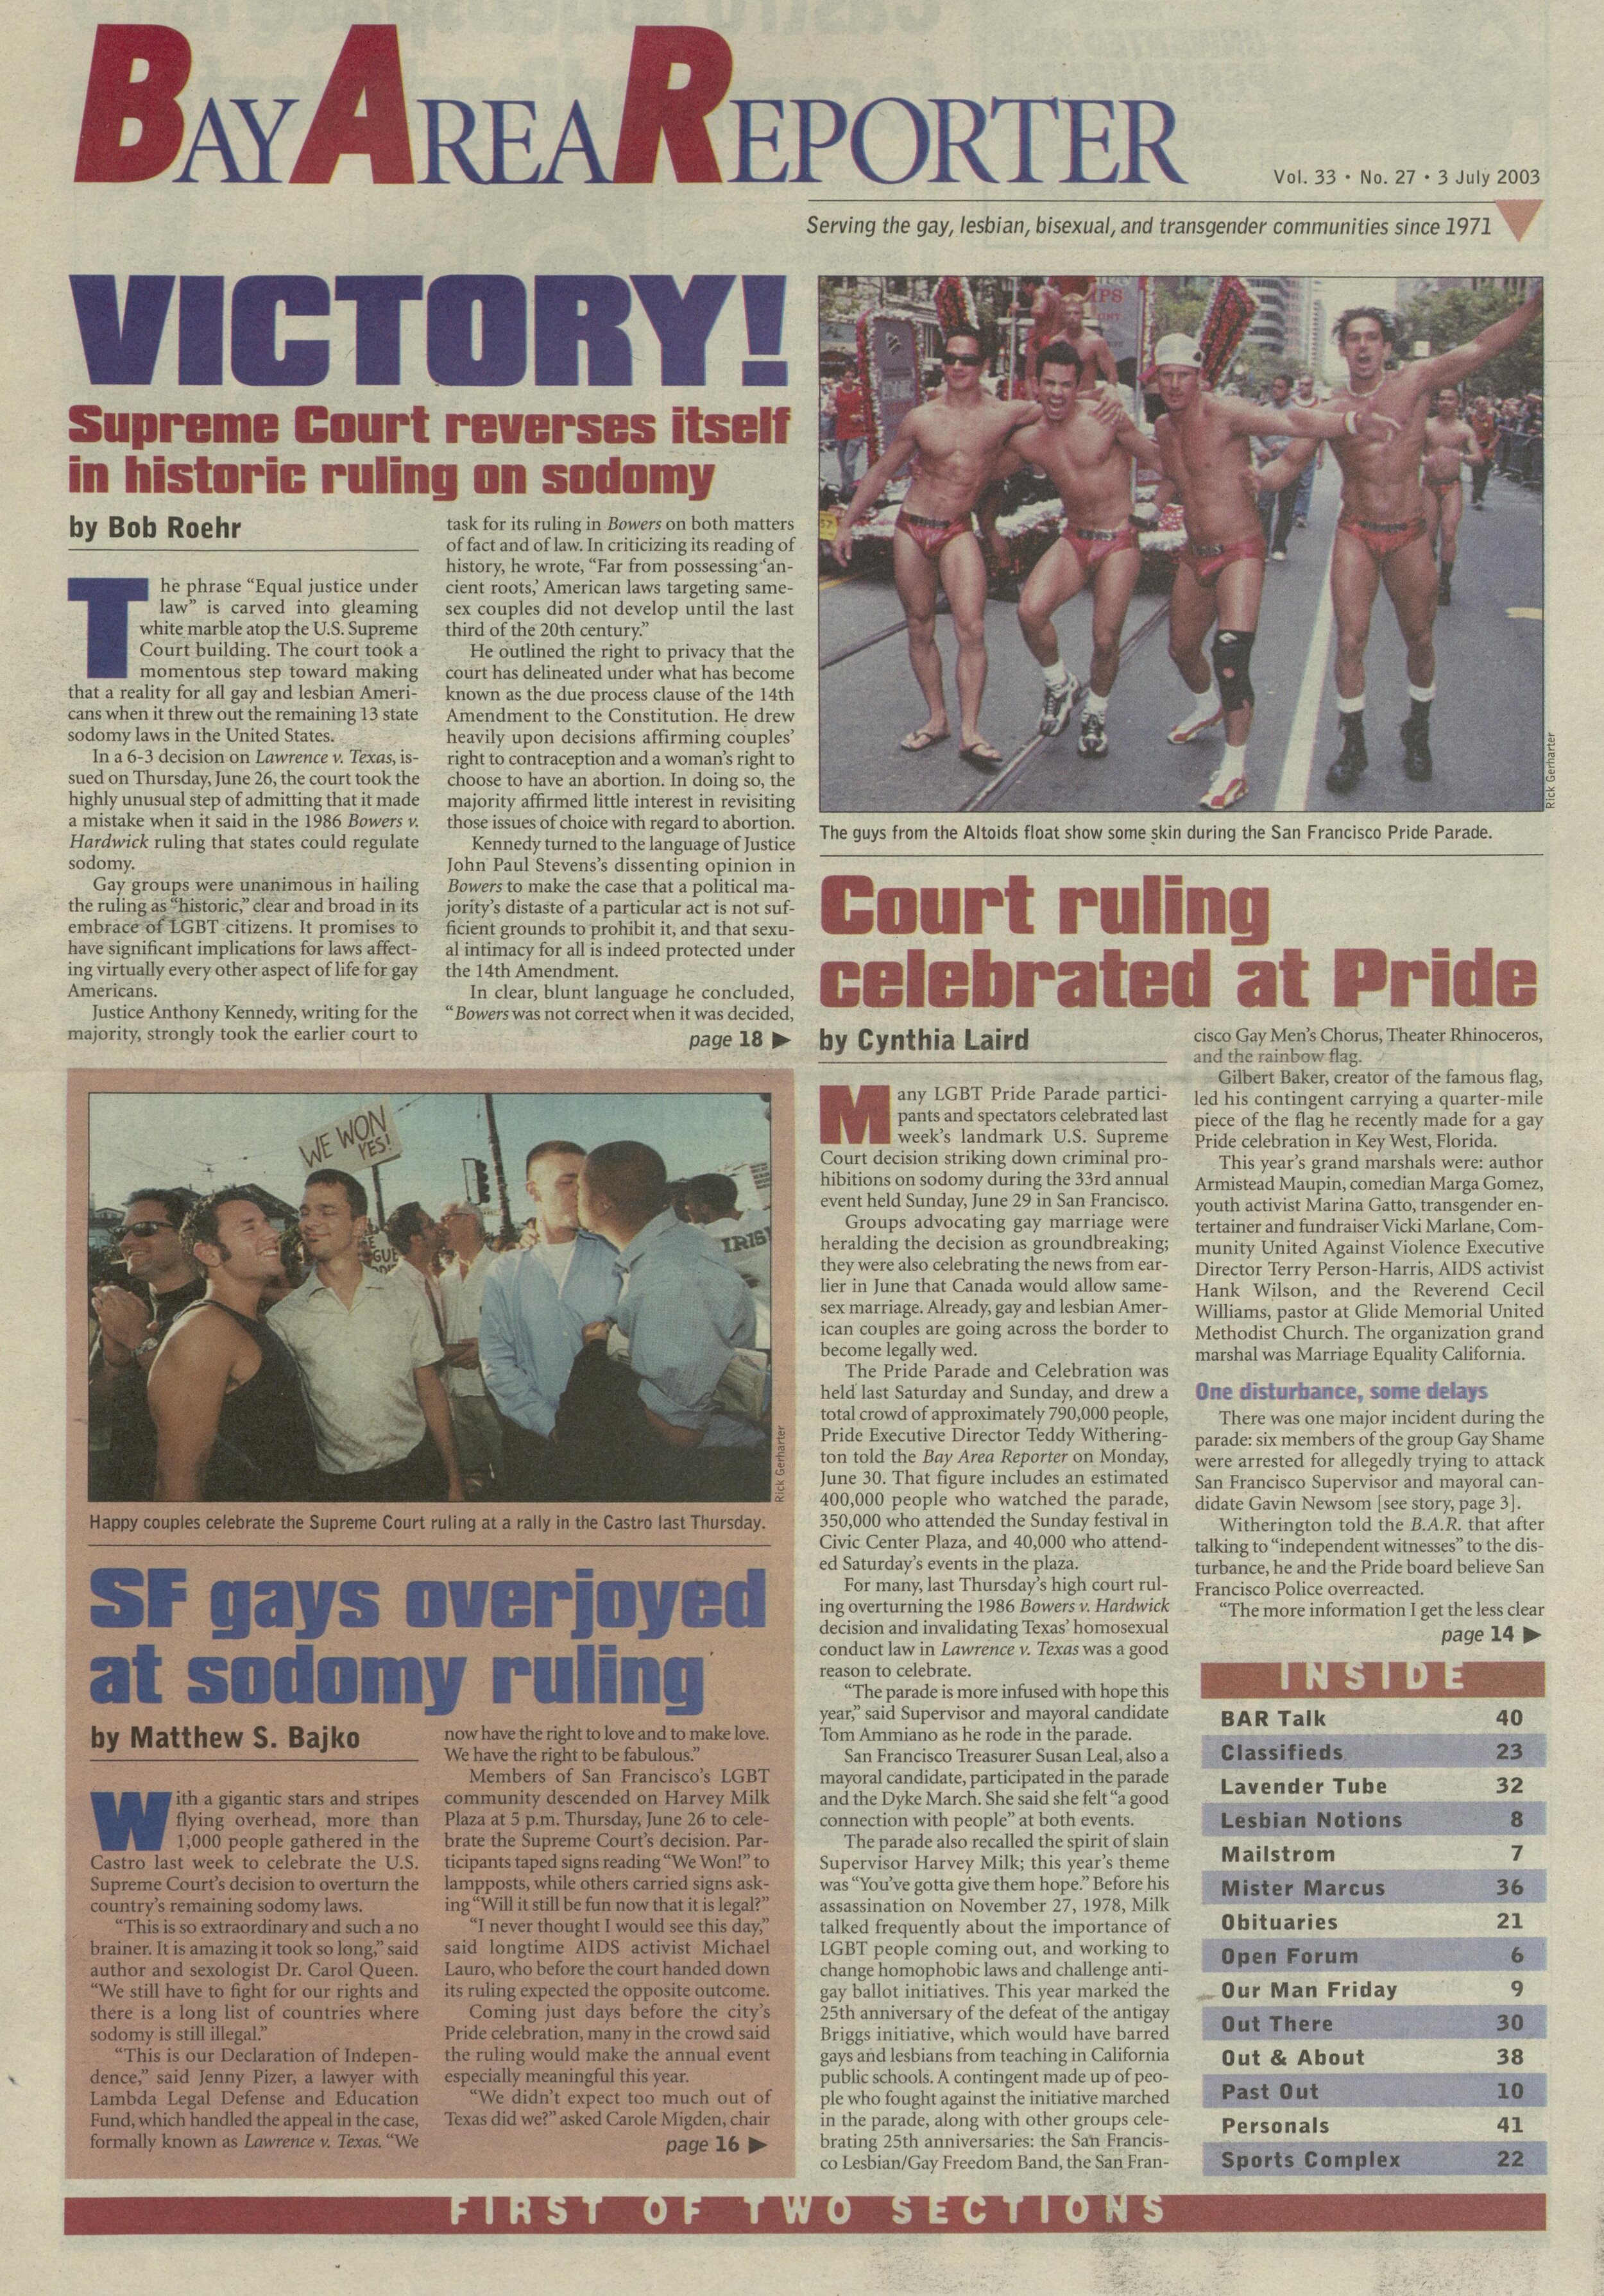  Vol. 33, No. 27, July 3, 2003.   Full Issue   